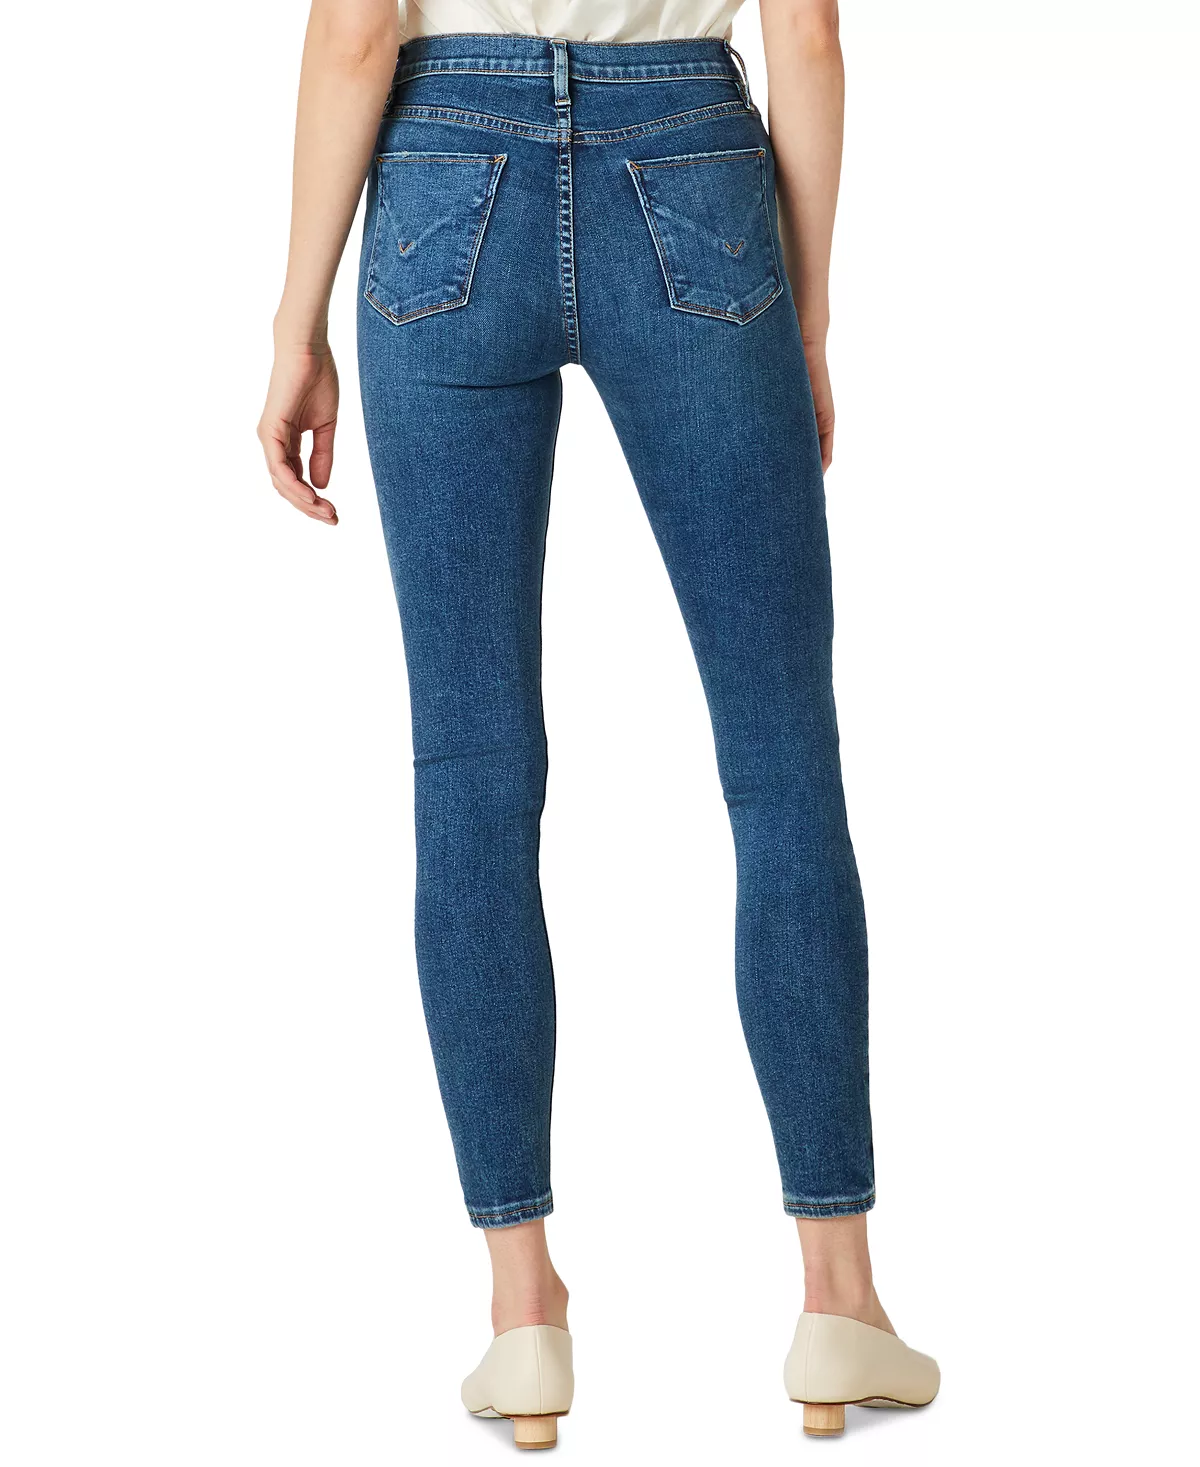 HUDSON Jeans Barbara High-Waist Super Skinny in Temptations  29